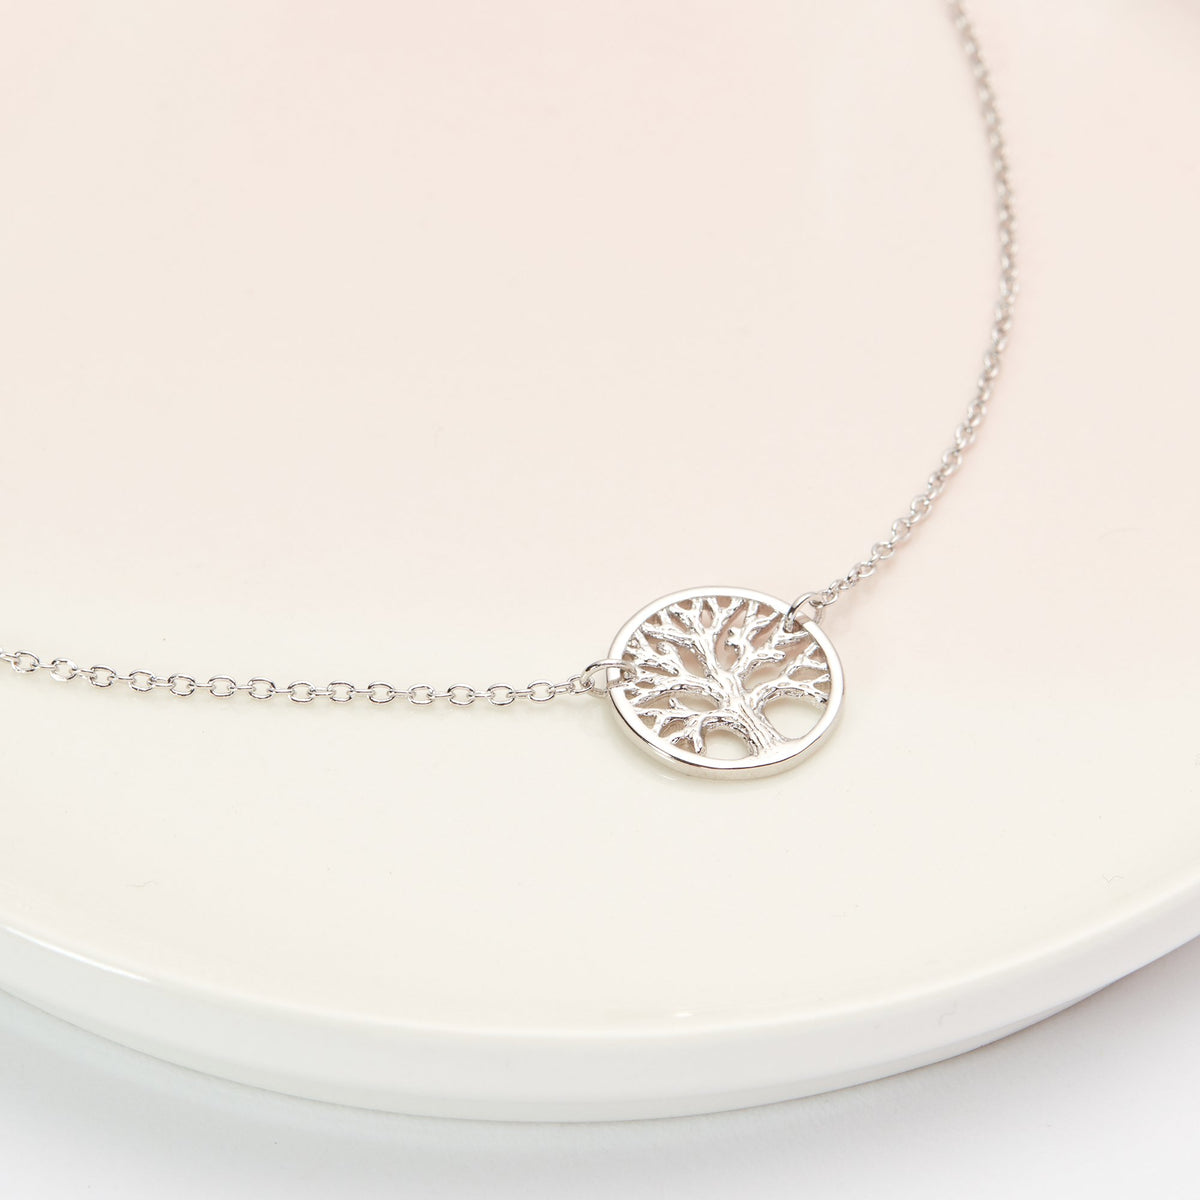 Grandma Necklace - Dear Ava, Jewelry / Necklaces / Pendants